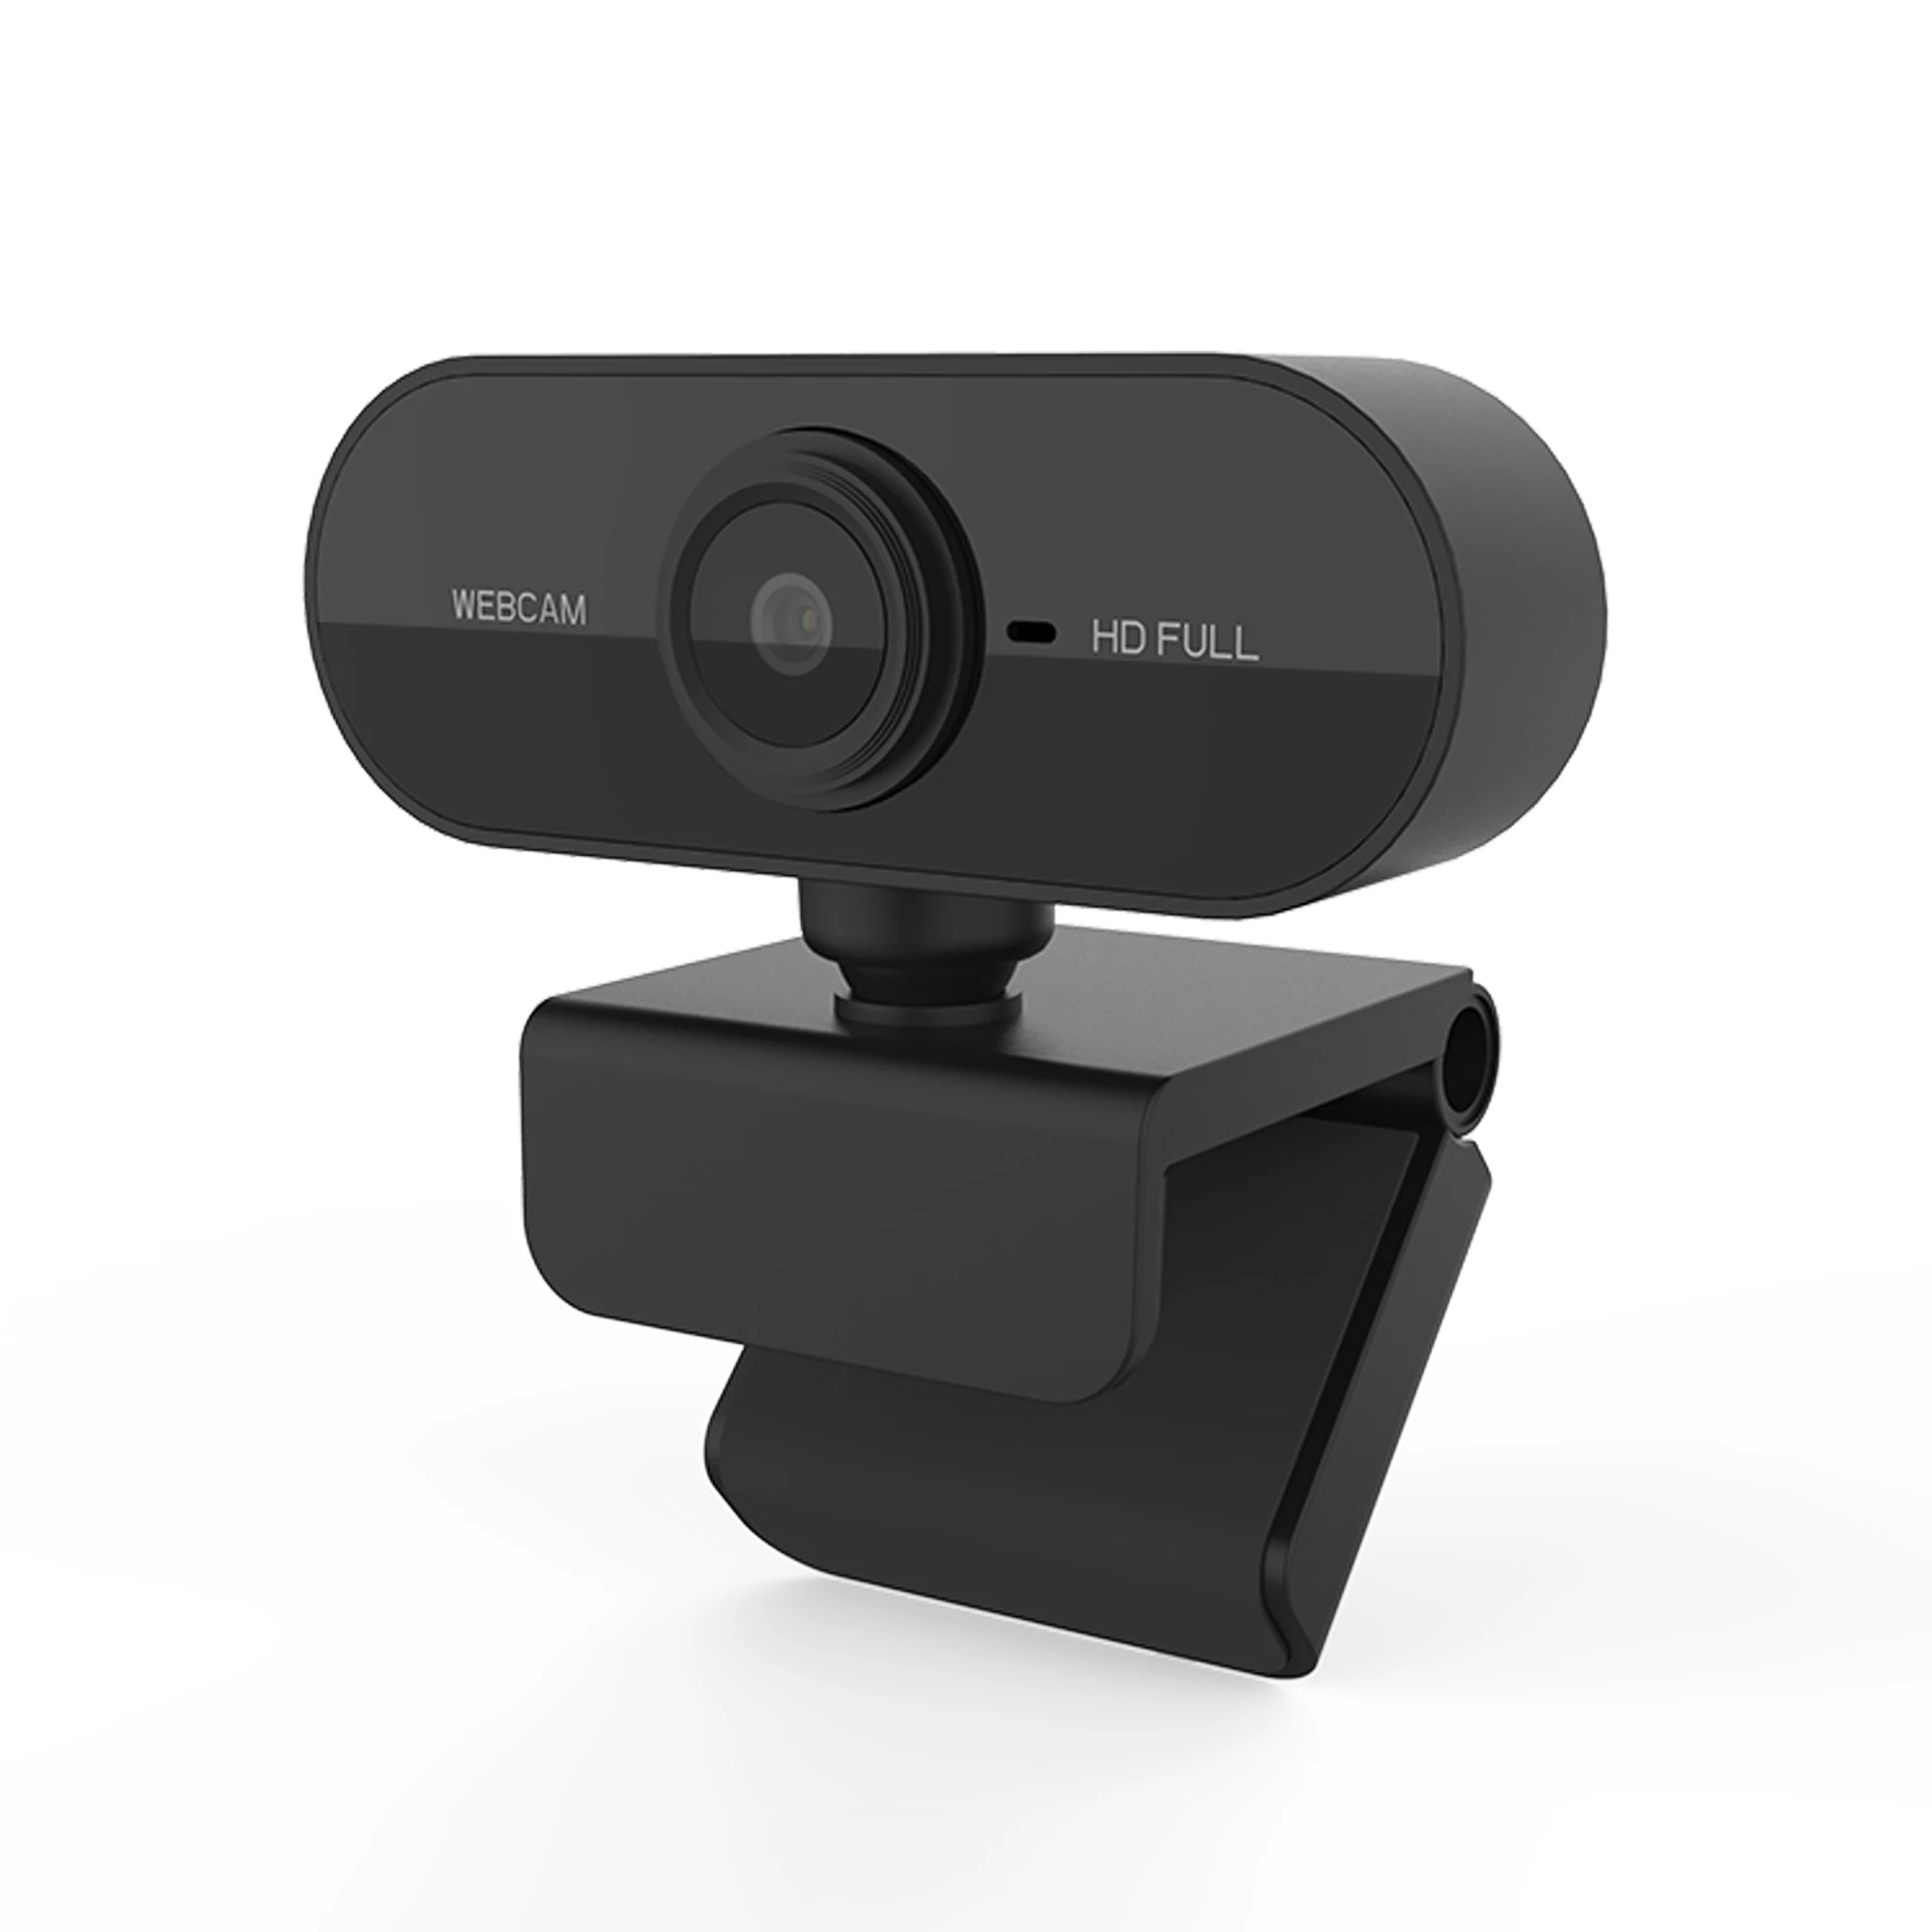 Cámara Web micrófono incorporado para portátil, Webcam de PC Full HD 1080P, USB, para